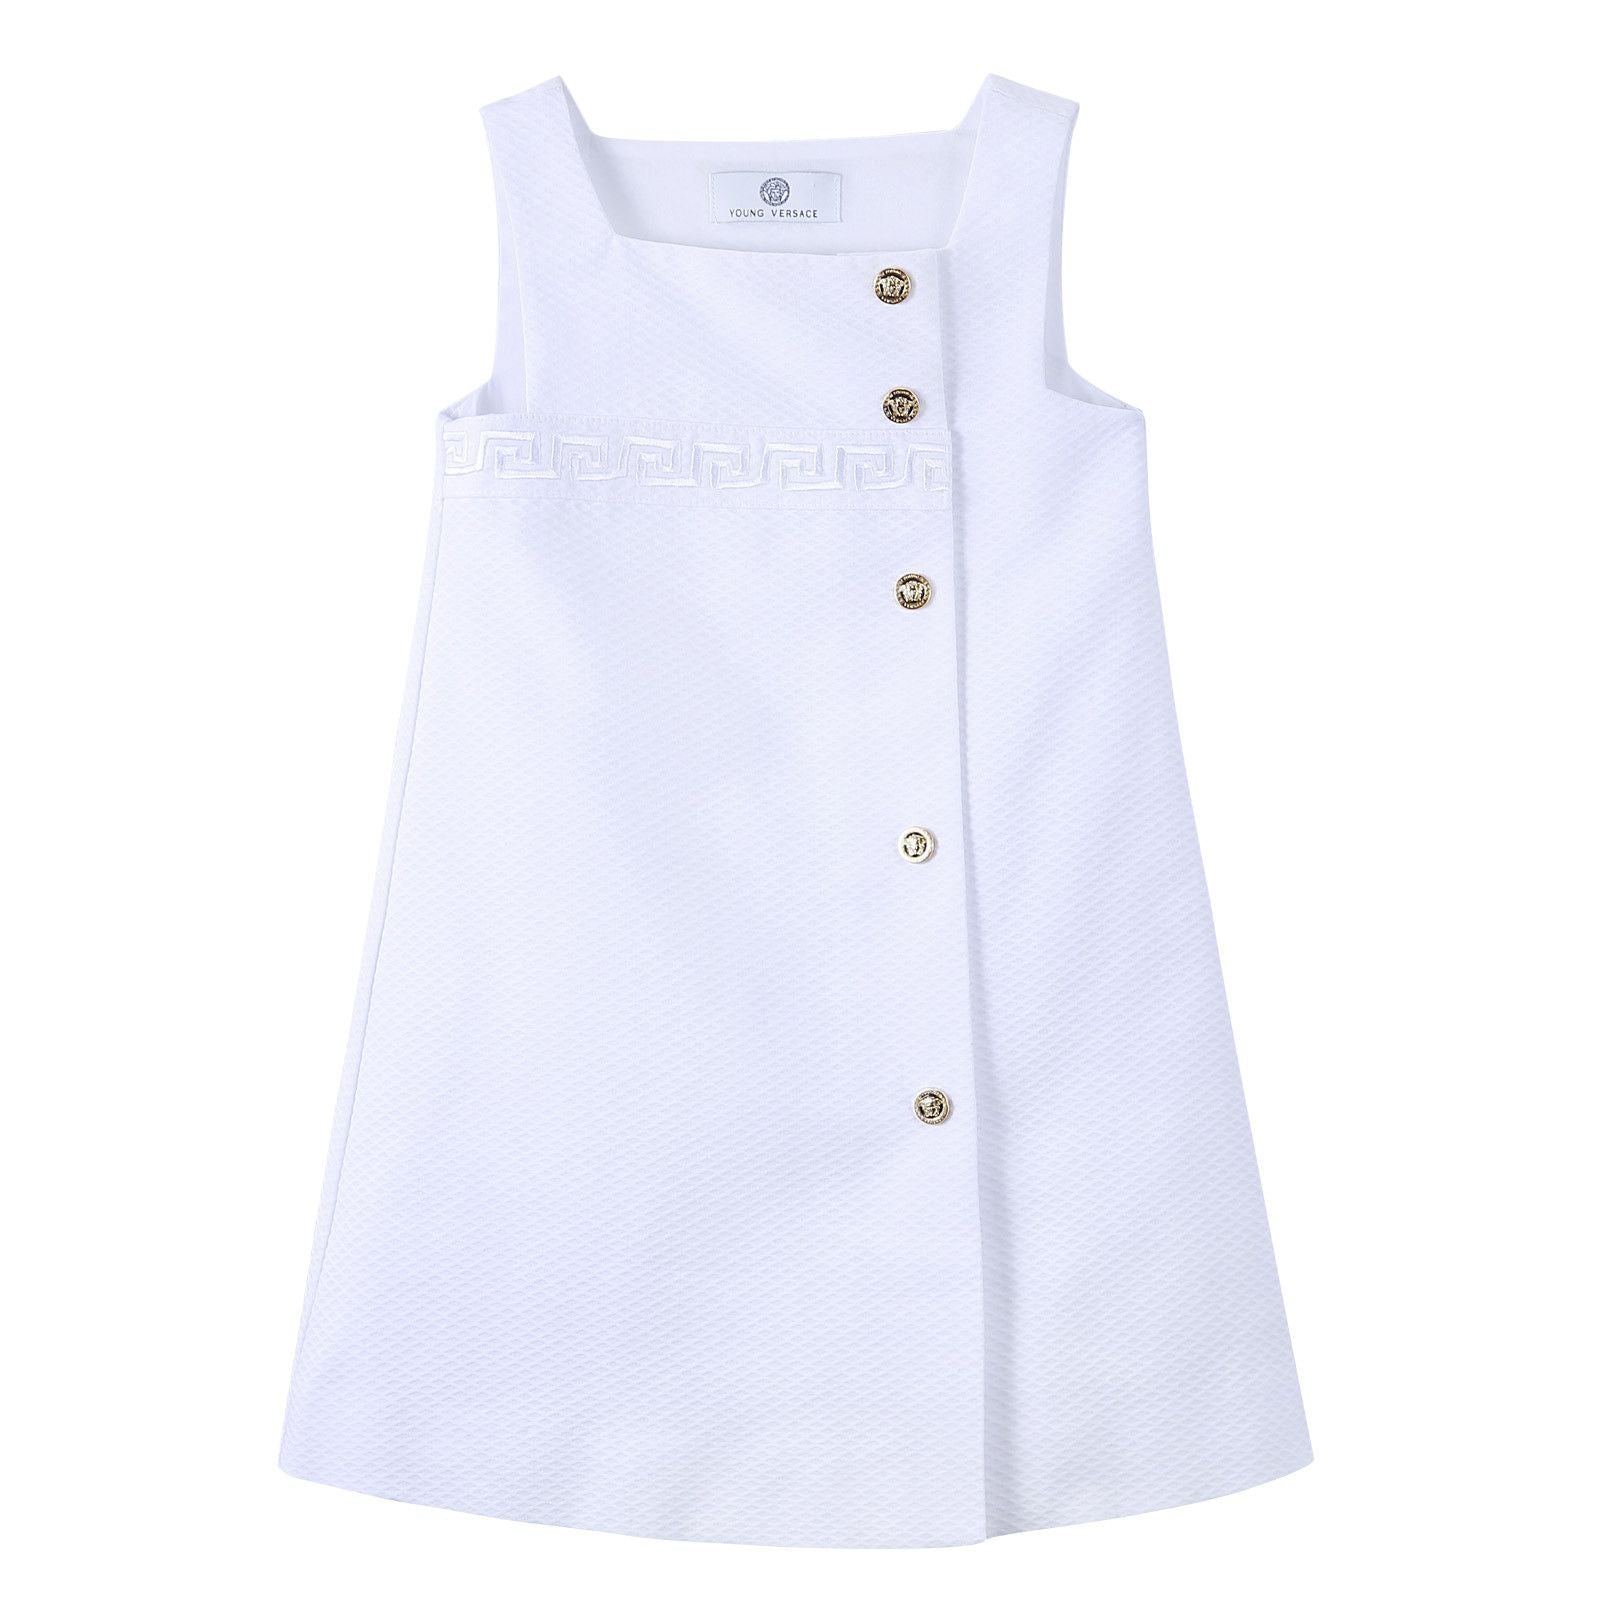 Girls White Cotton Sleeveless Dress With Greca Key Trims - CÉMAROSE | Children's Fashion Store - 1